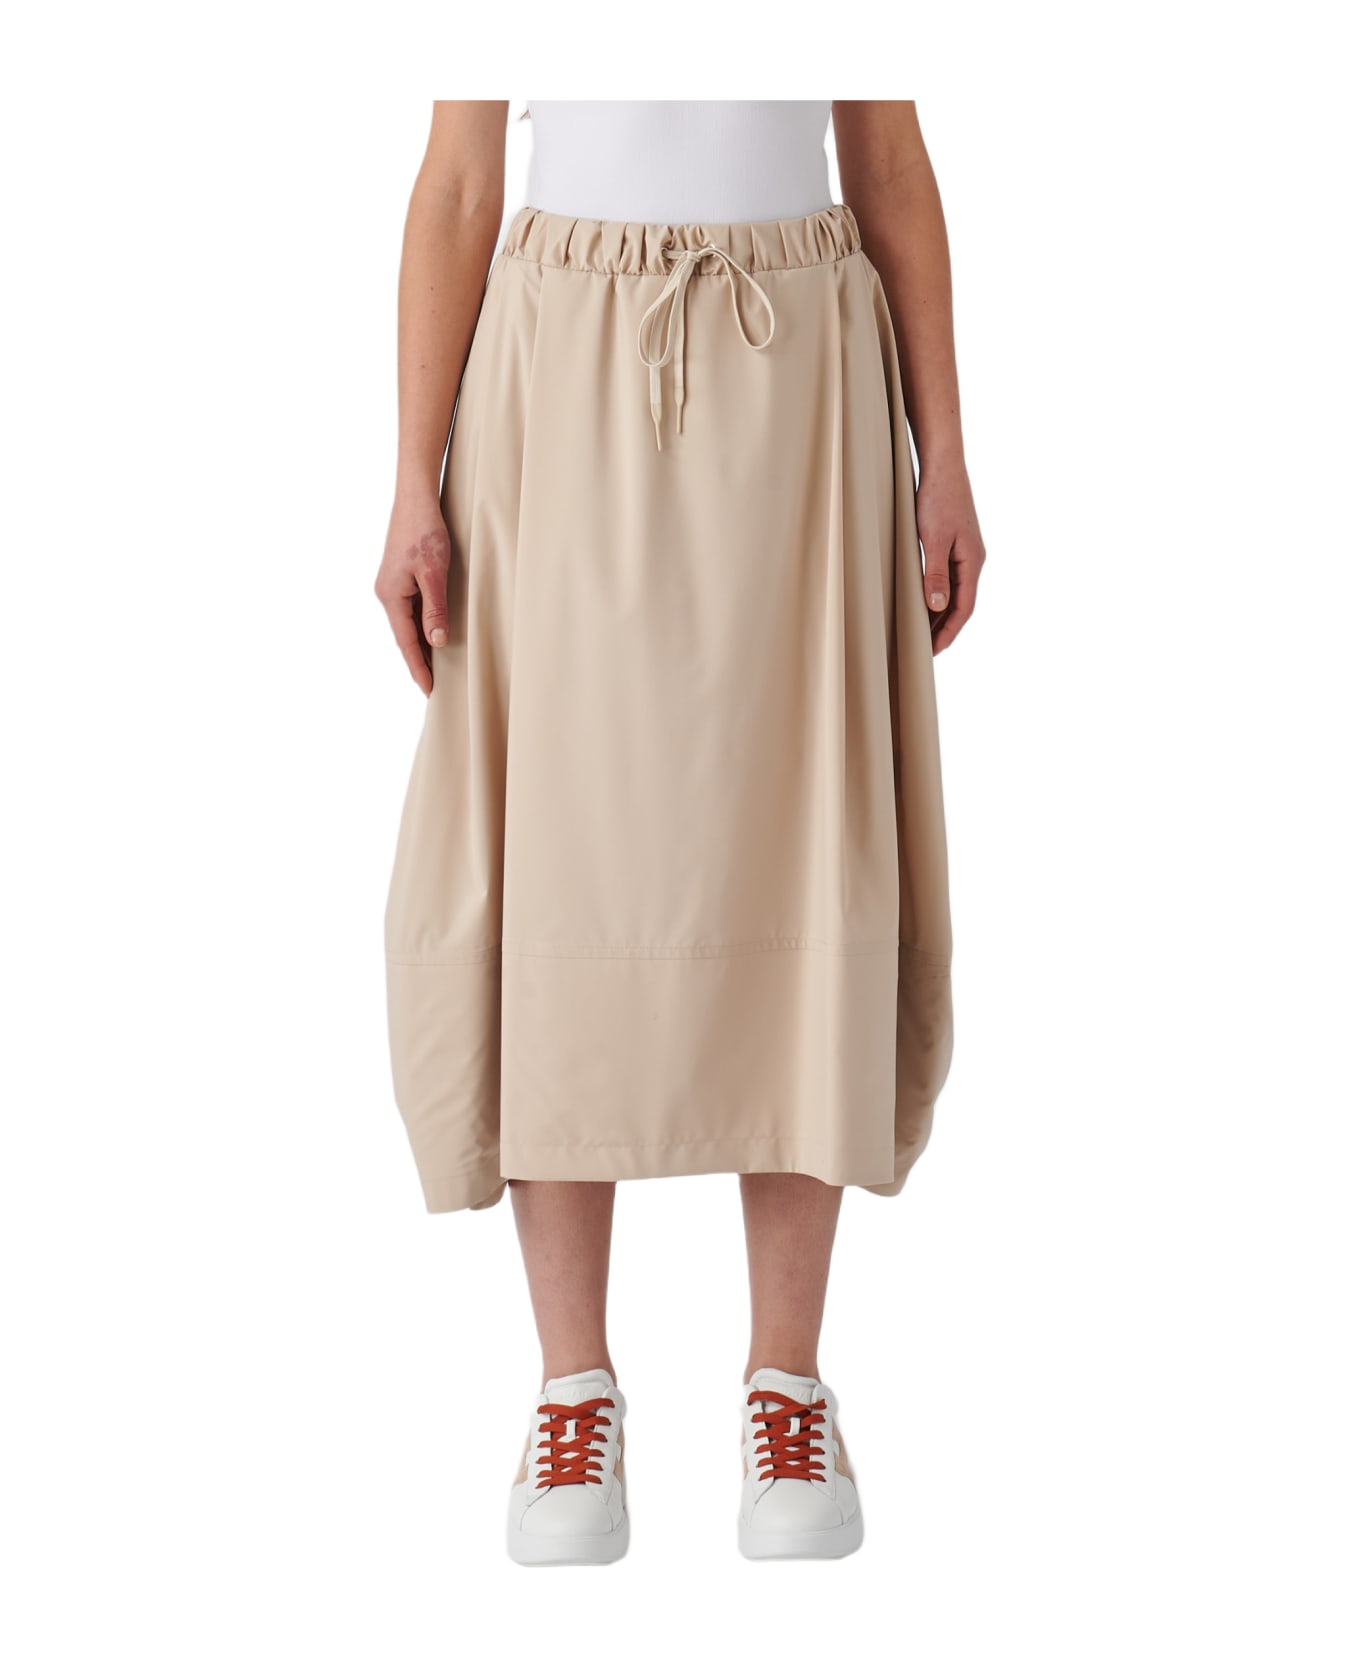 Gran Sasso Poliester Skirt - SABBIA スカート